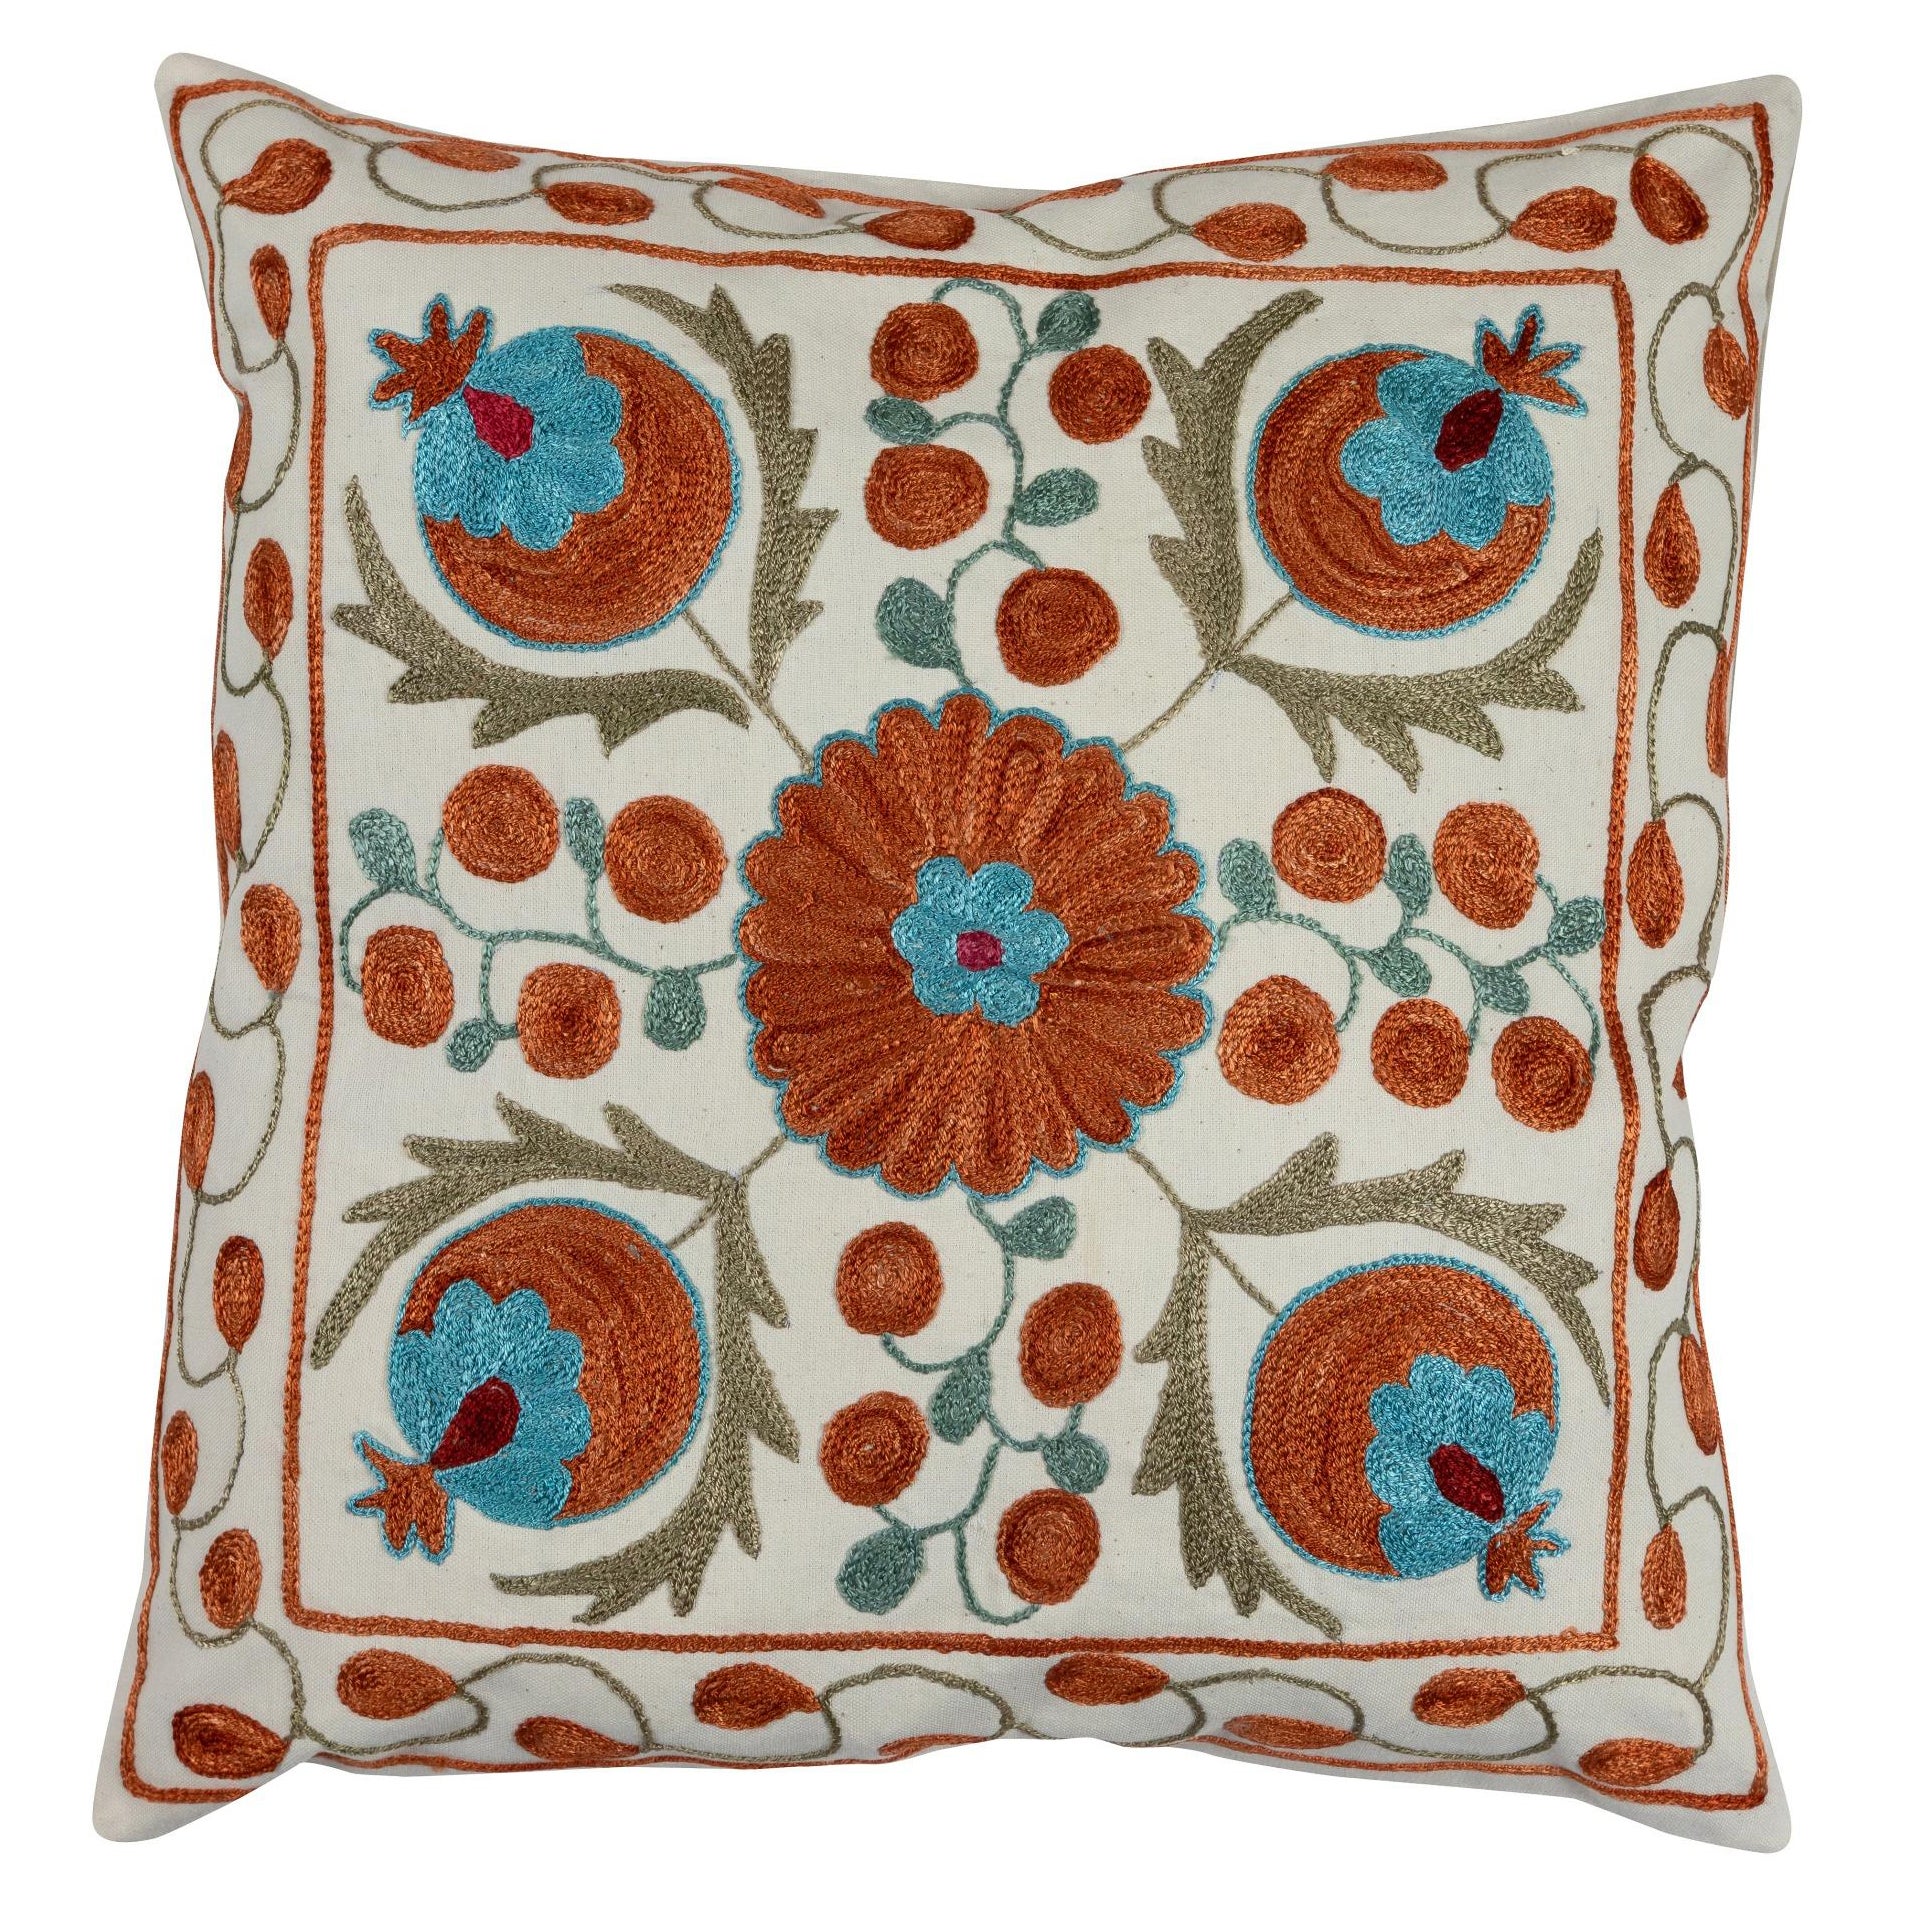 New Handmade Uzbek Suzani Pillow Case. Embroidered Cotton & Silk Cushion Cover